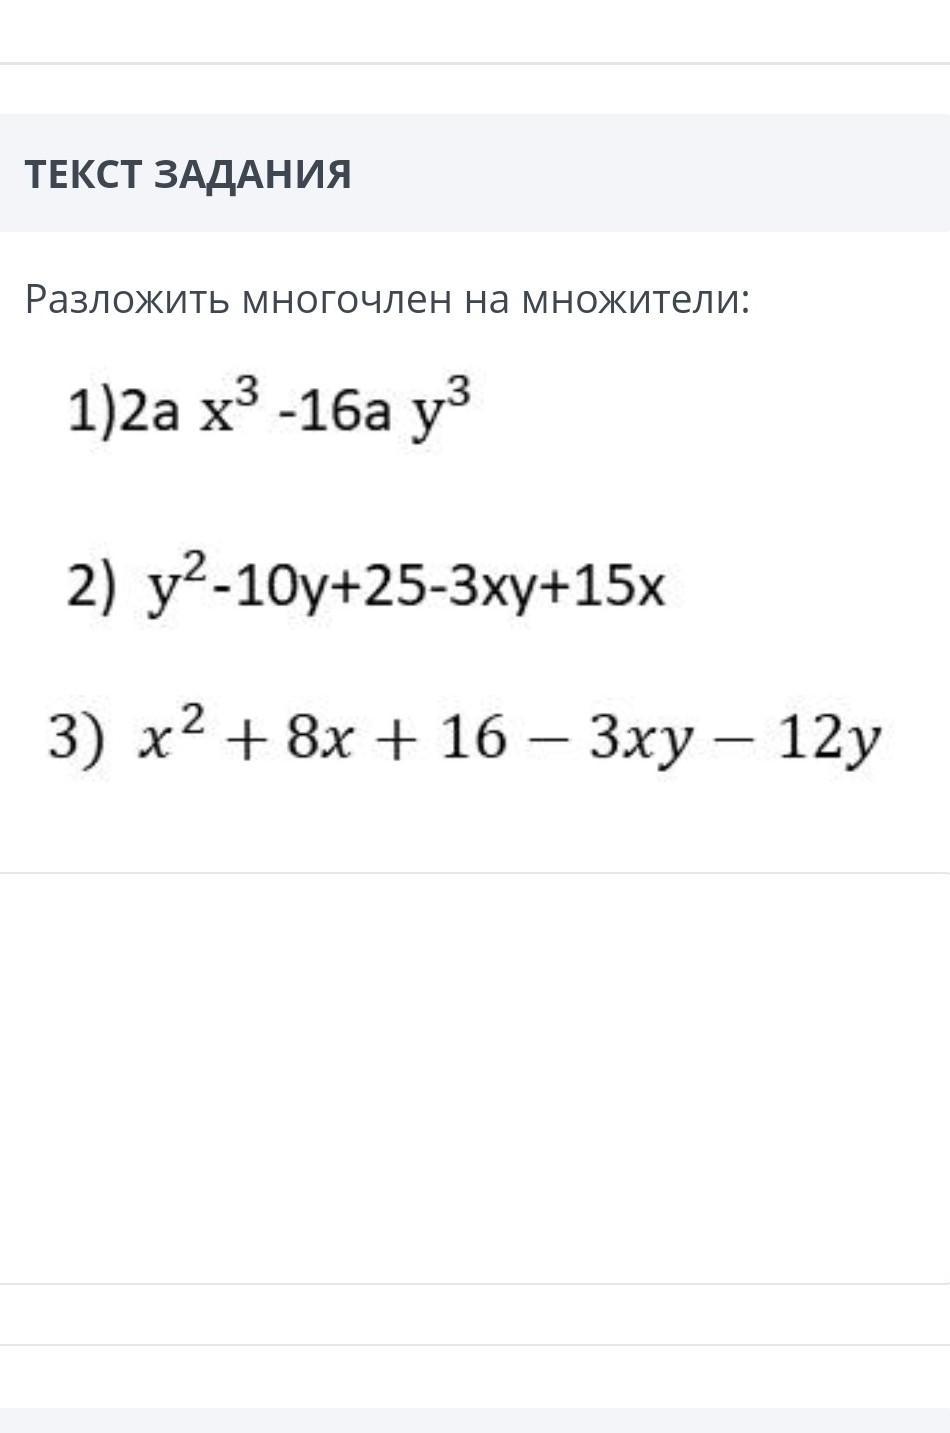 Разложите на множители x2 2xy y2